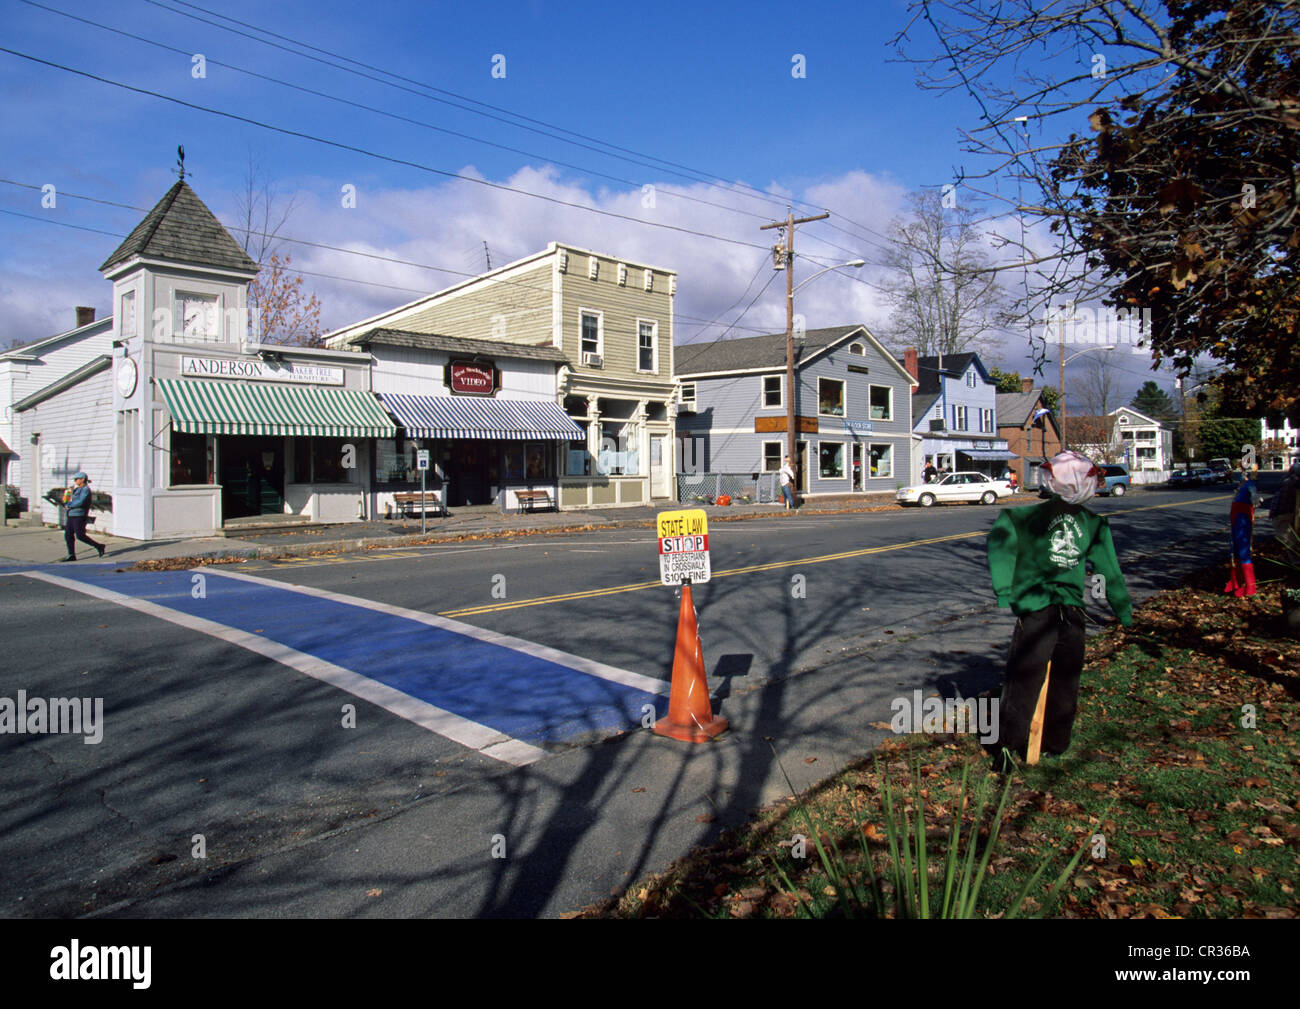 United States, Massachusetts, the Berkshires, Stockbridge, Halloween decorations in the street Stock Photo